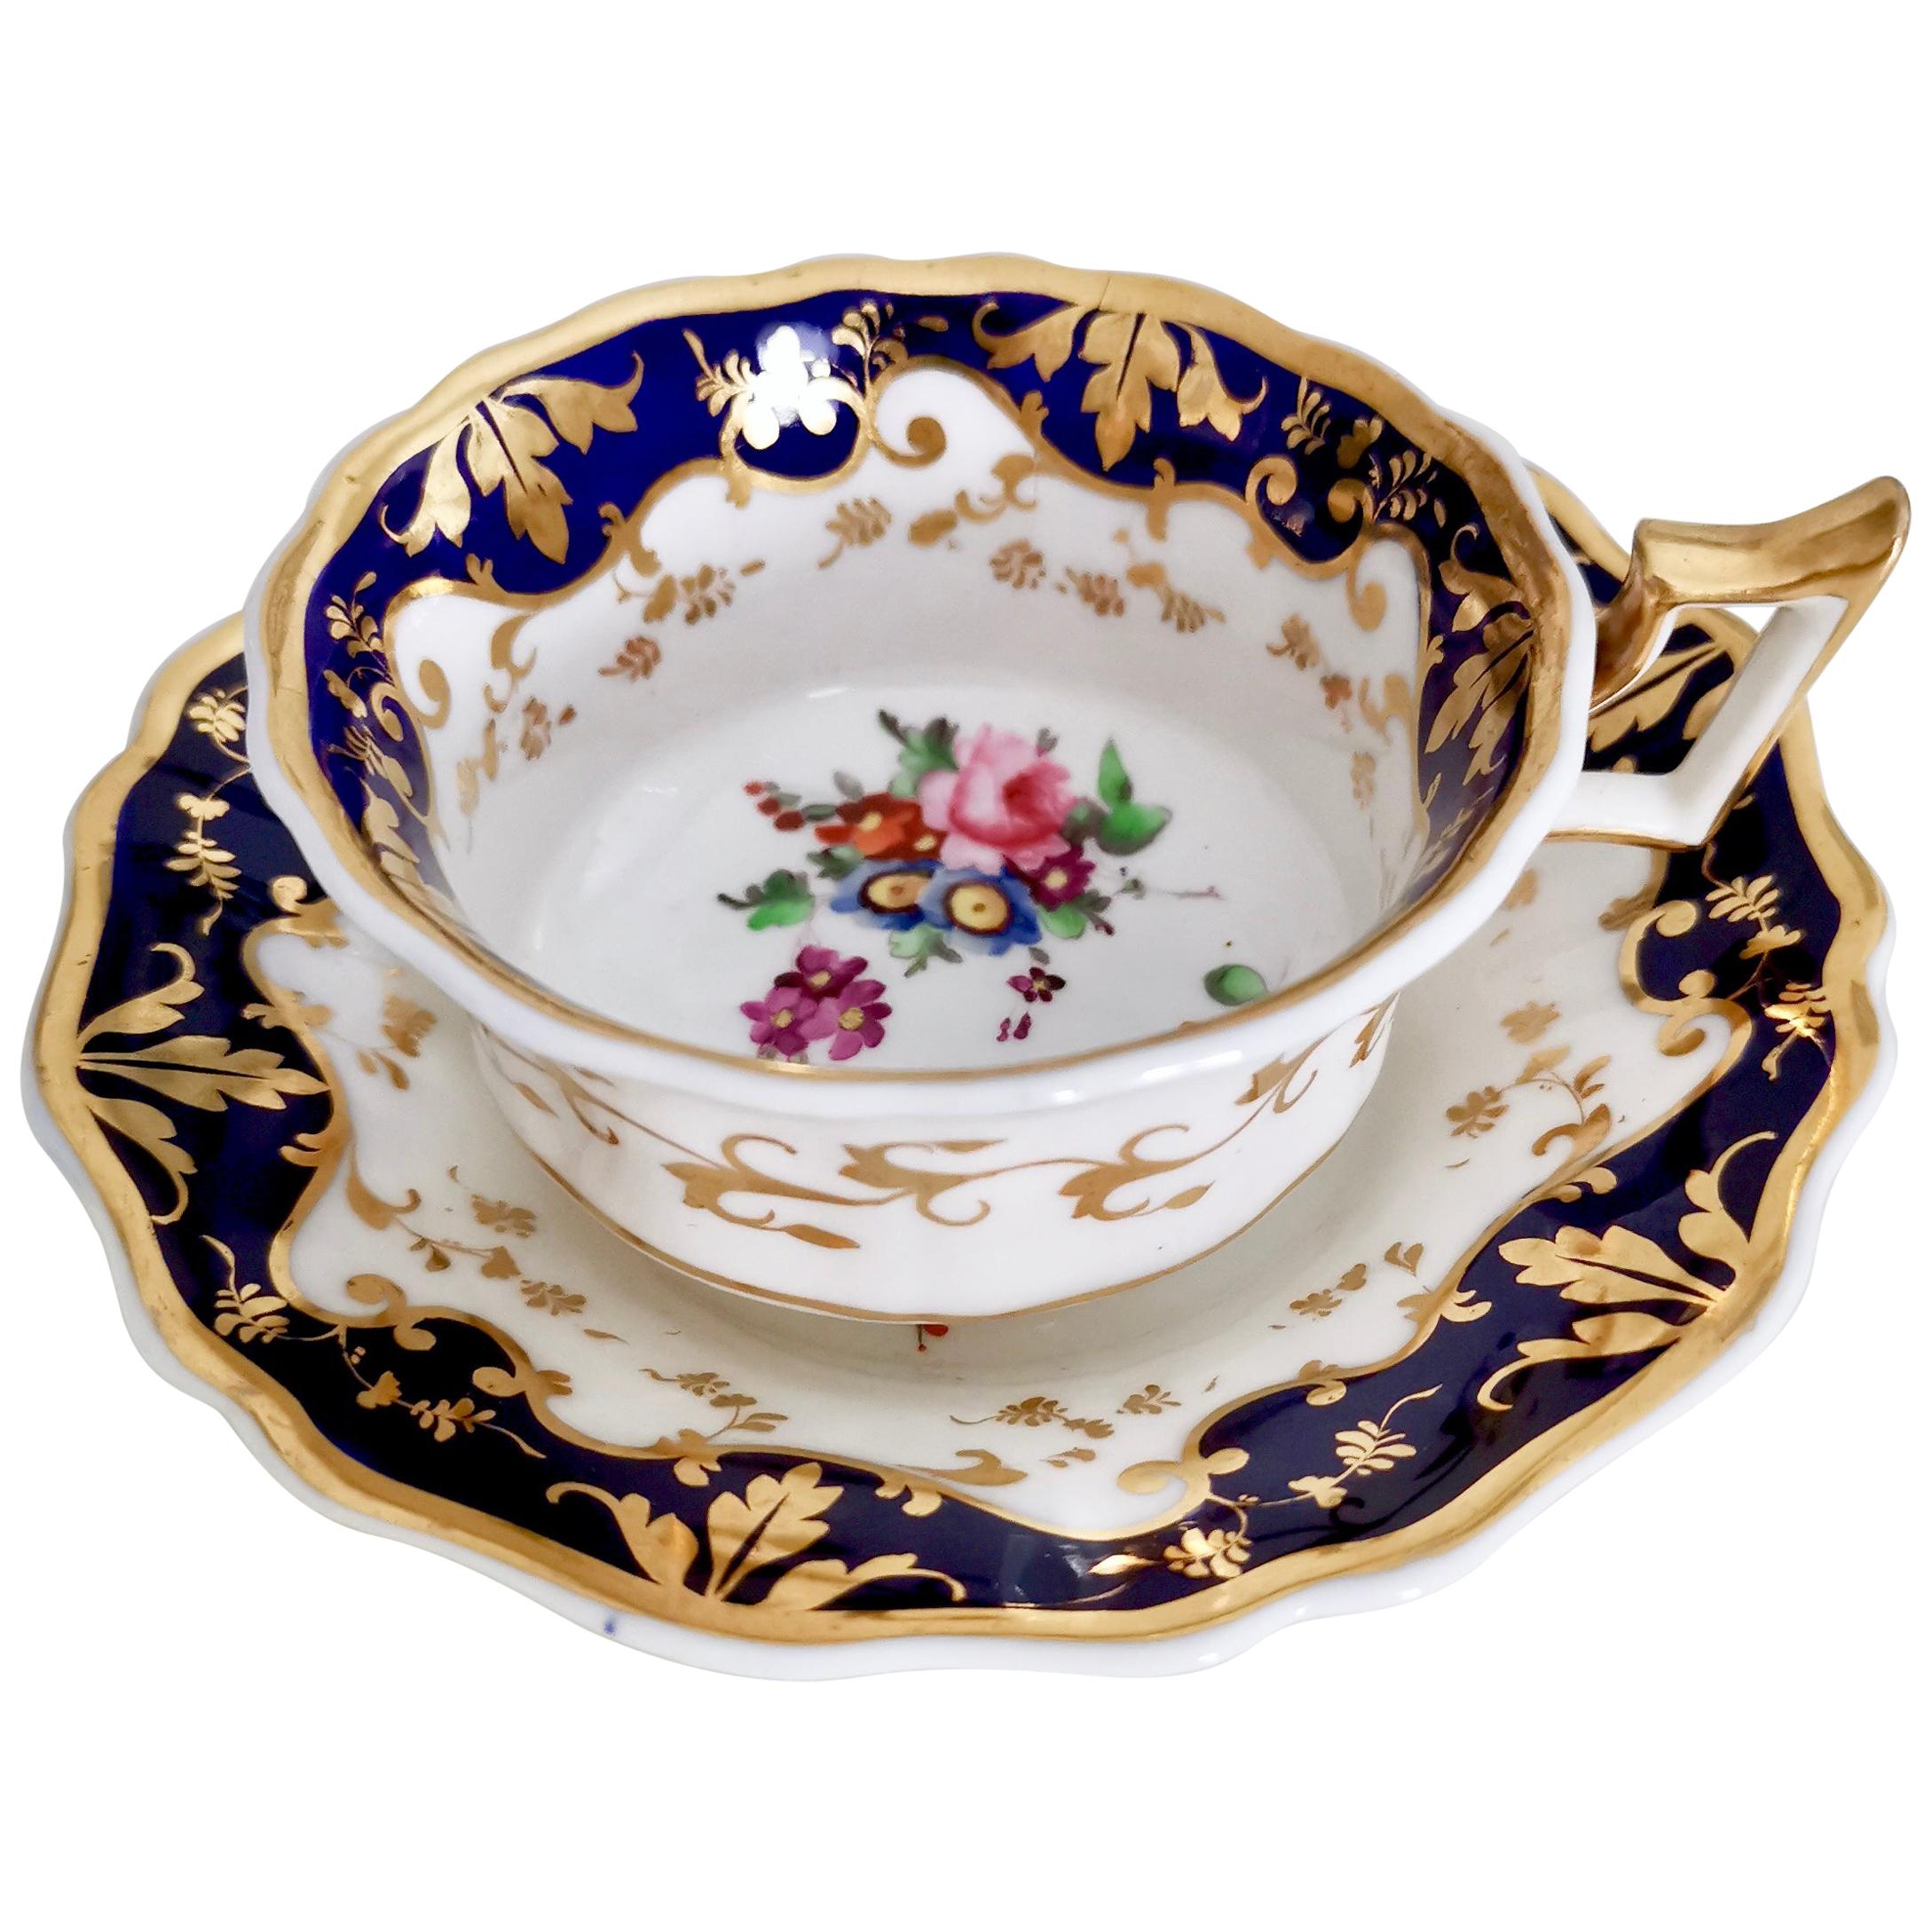 Ridgway Porcelain Teacup, Cobalt Blue, Gilt and Flowers, Regency